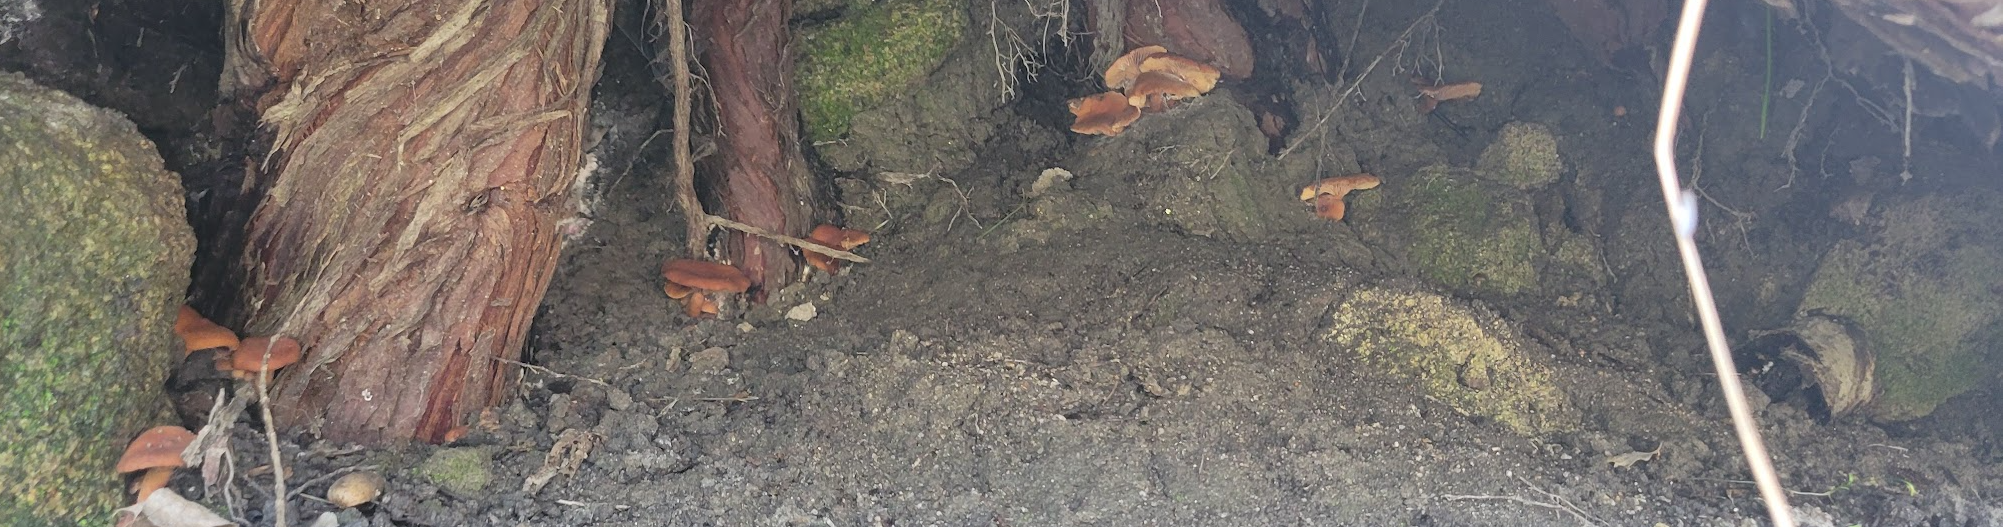 mushrooms growing under tree roots